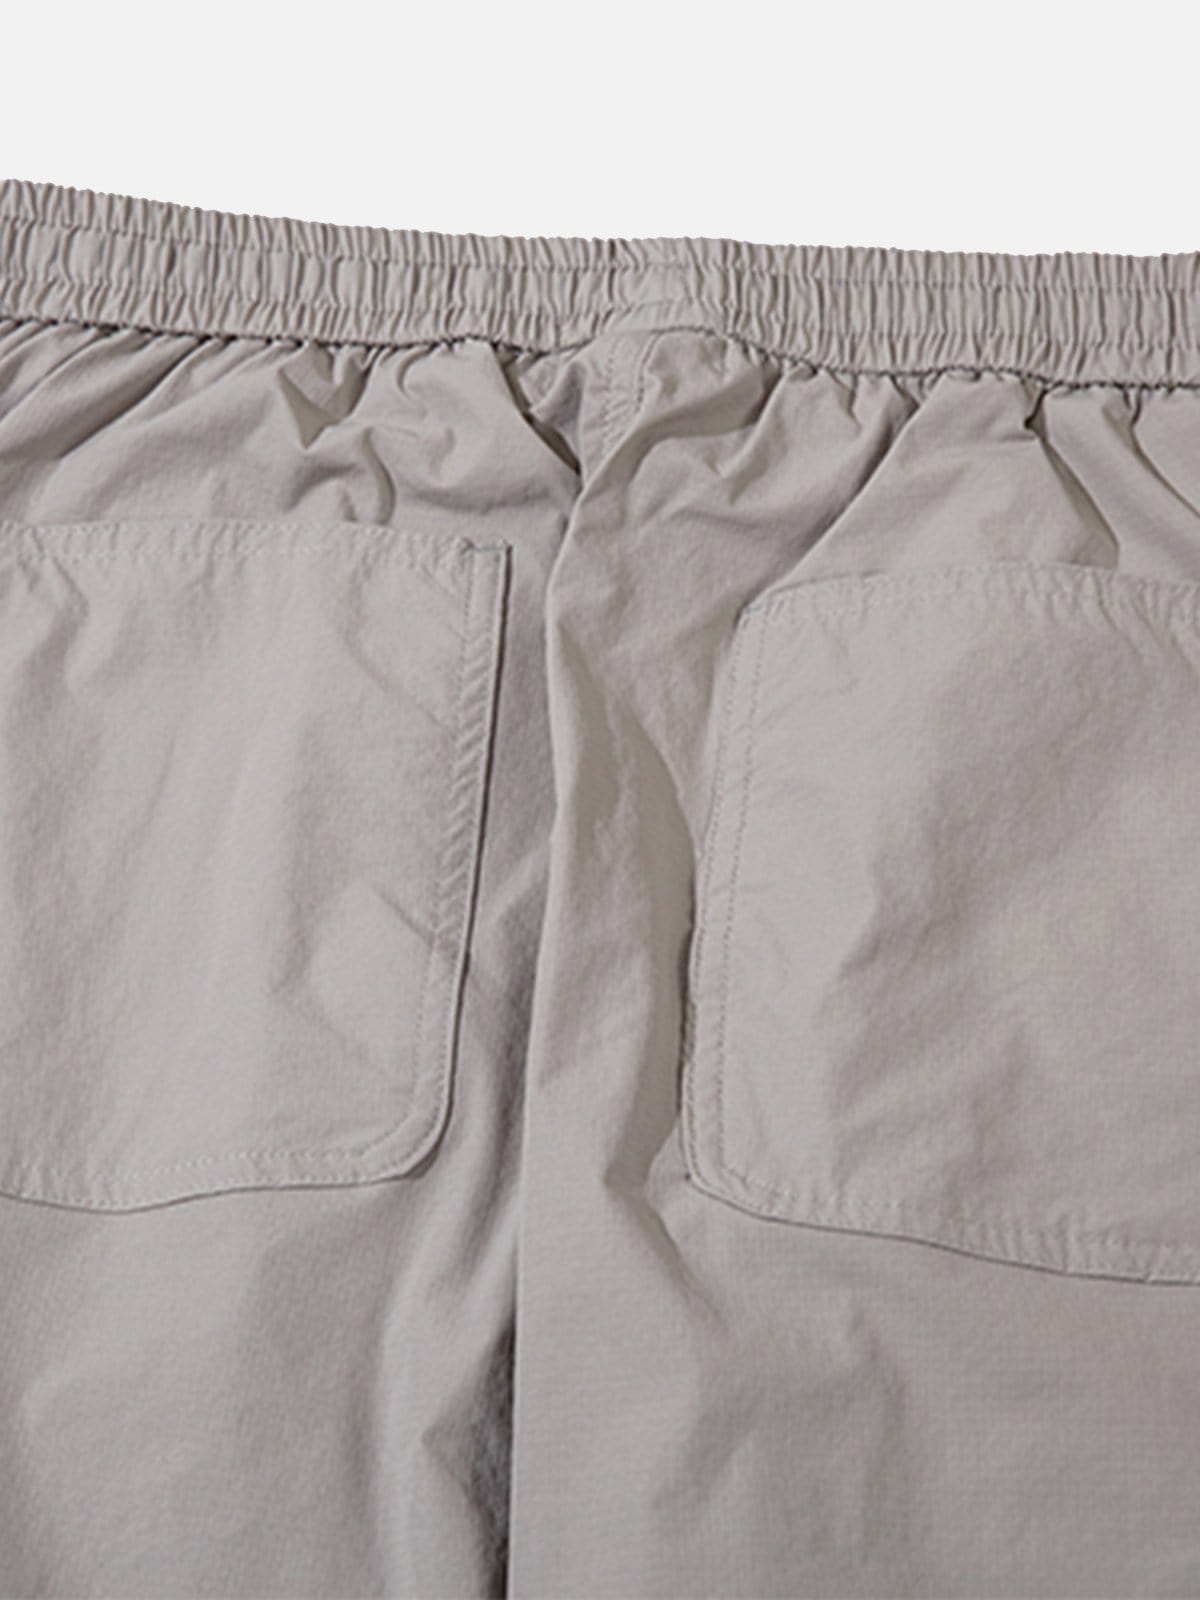 NEV Waterproof Quick Dry Drawstring Casual Pants